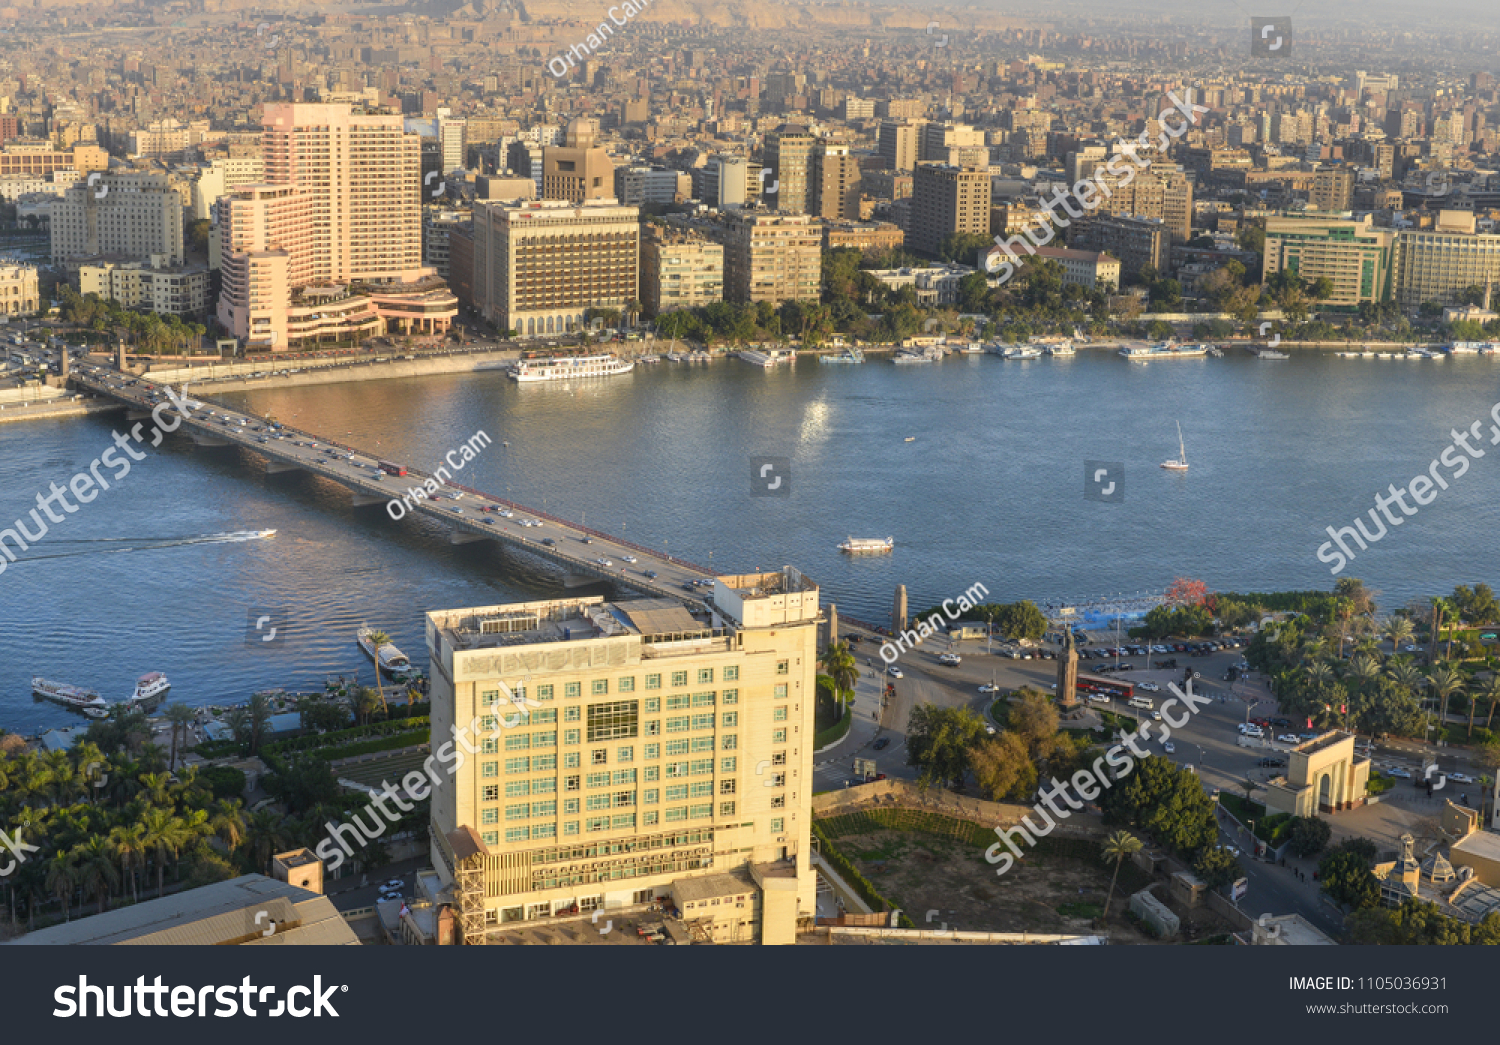 Cairo skyline - Cairo, Egypt #1105036931